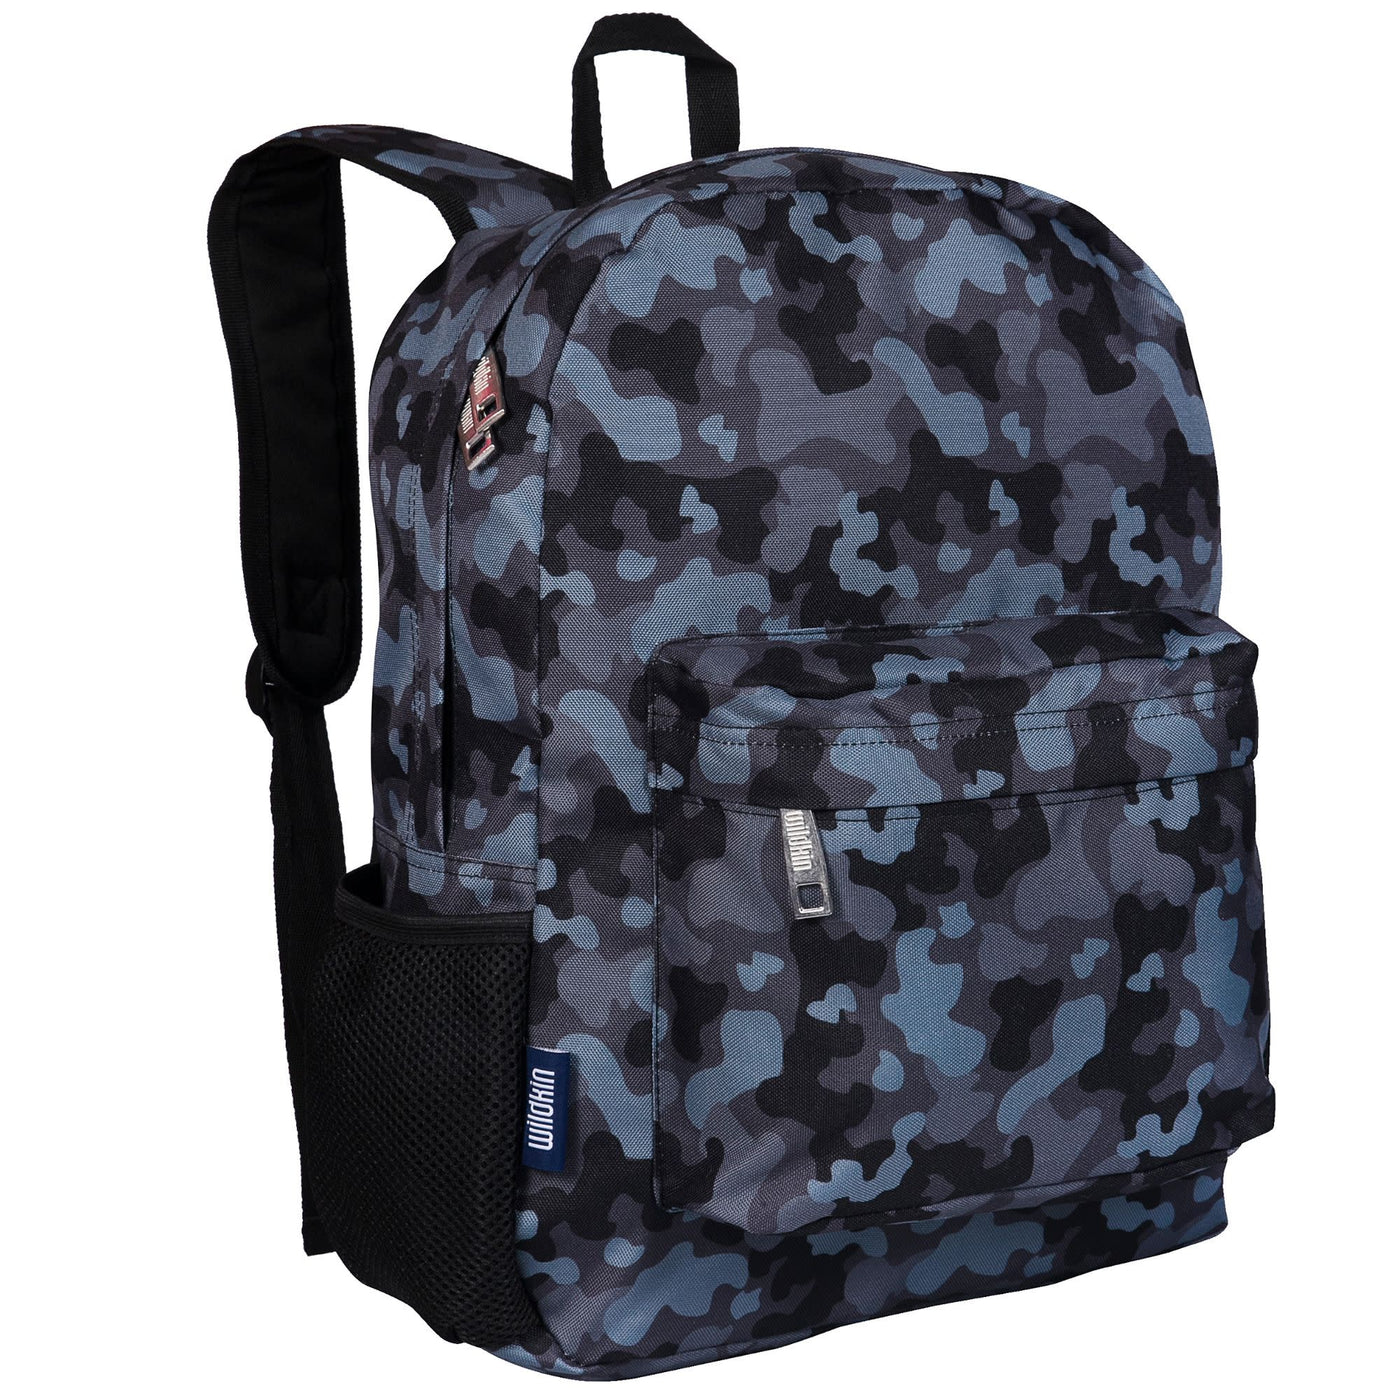 Wildkin Sixteen Inch Backpack + More Options